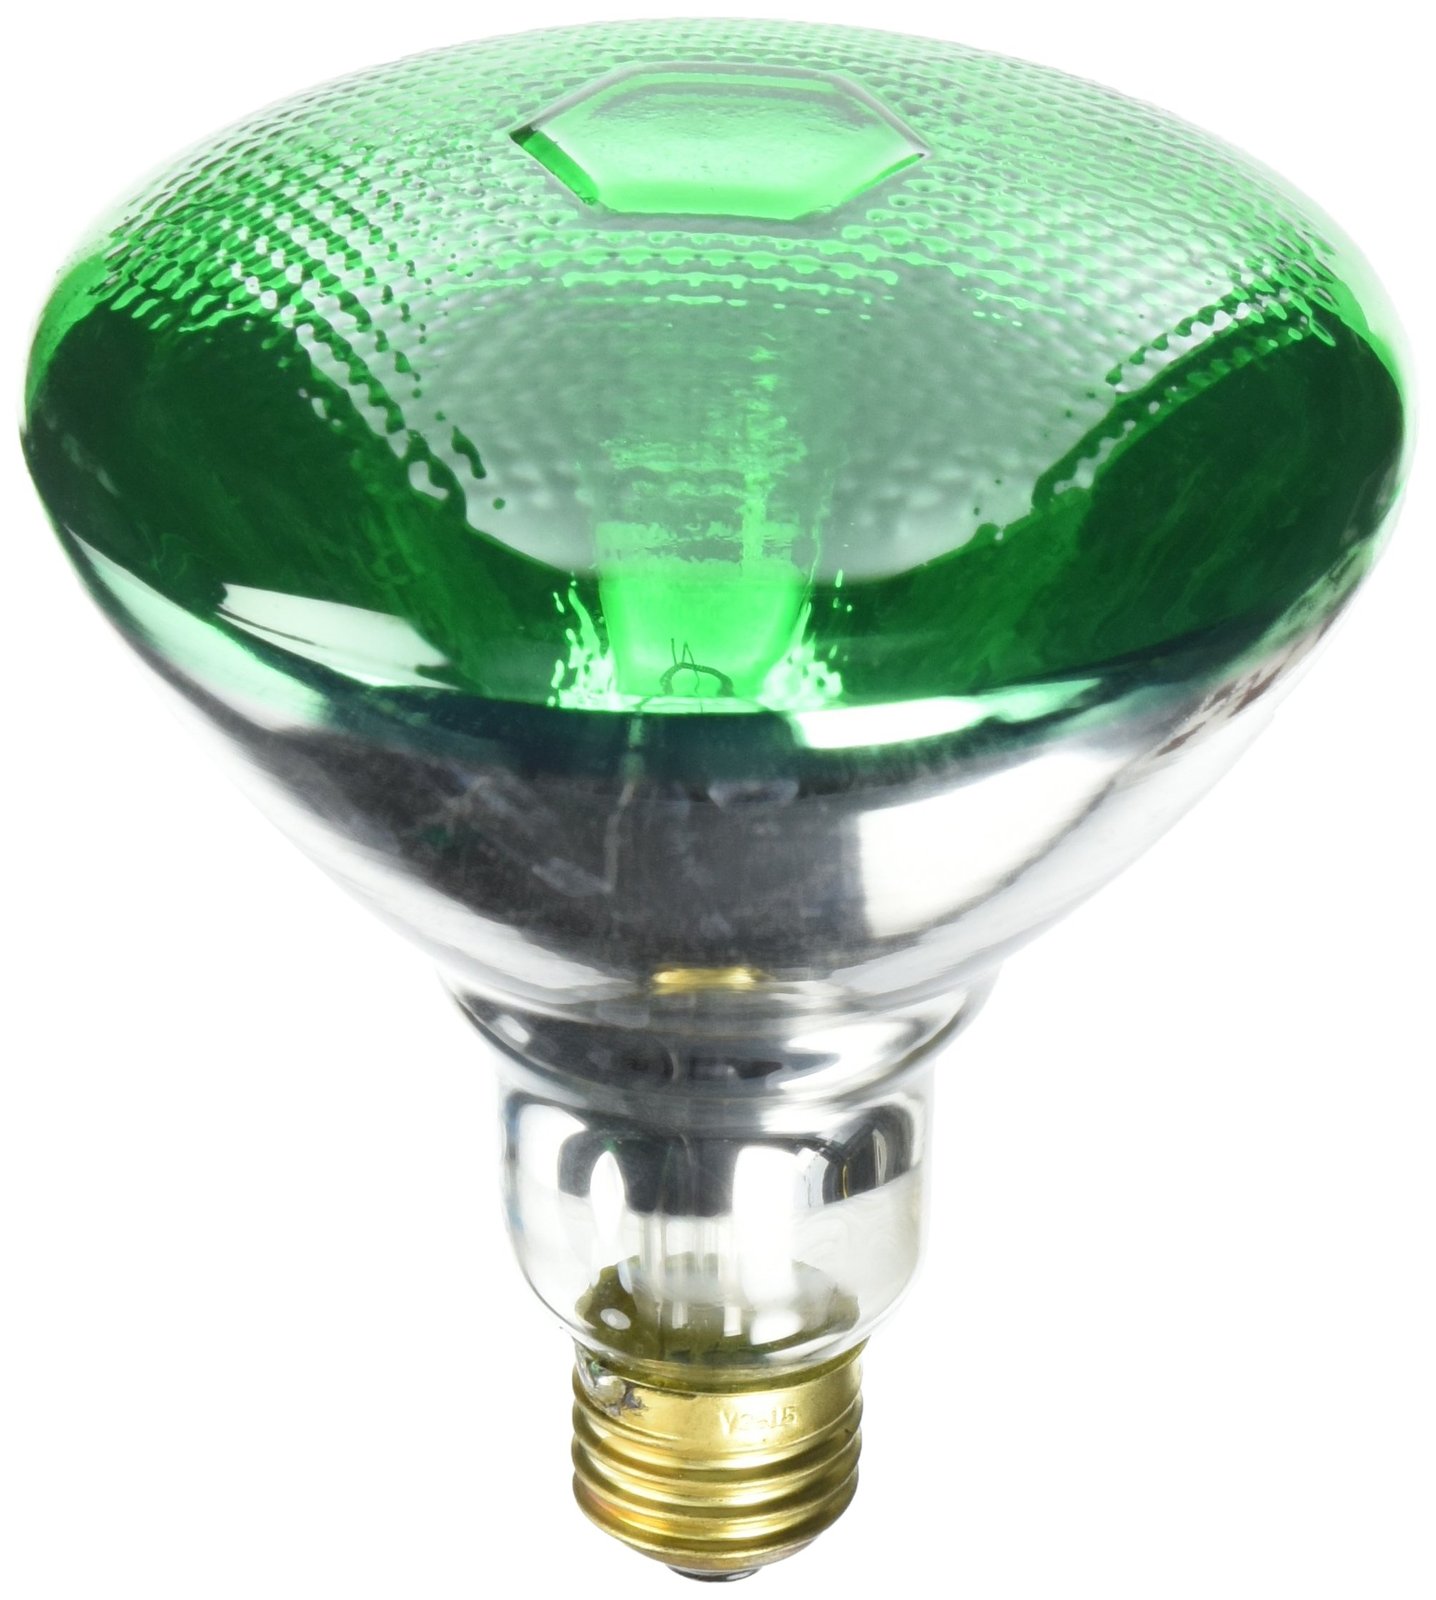 Westinghouse 0441300, 100 Watt, 120 Volt Green Incandescent BR38 Light Bulb - 20 - $2.47